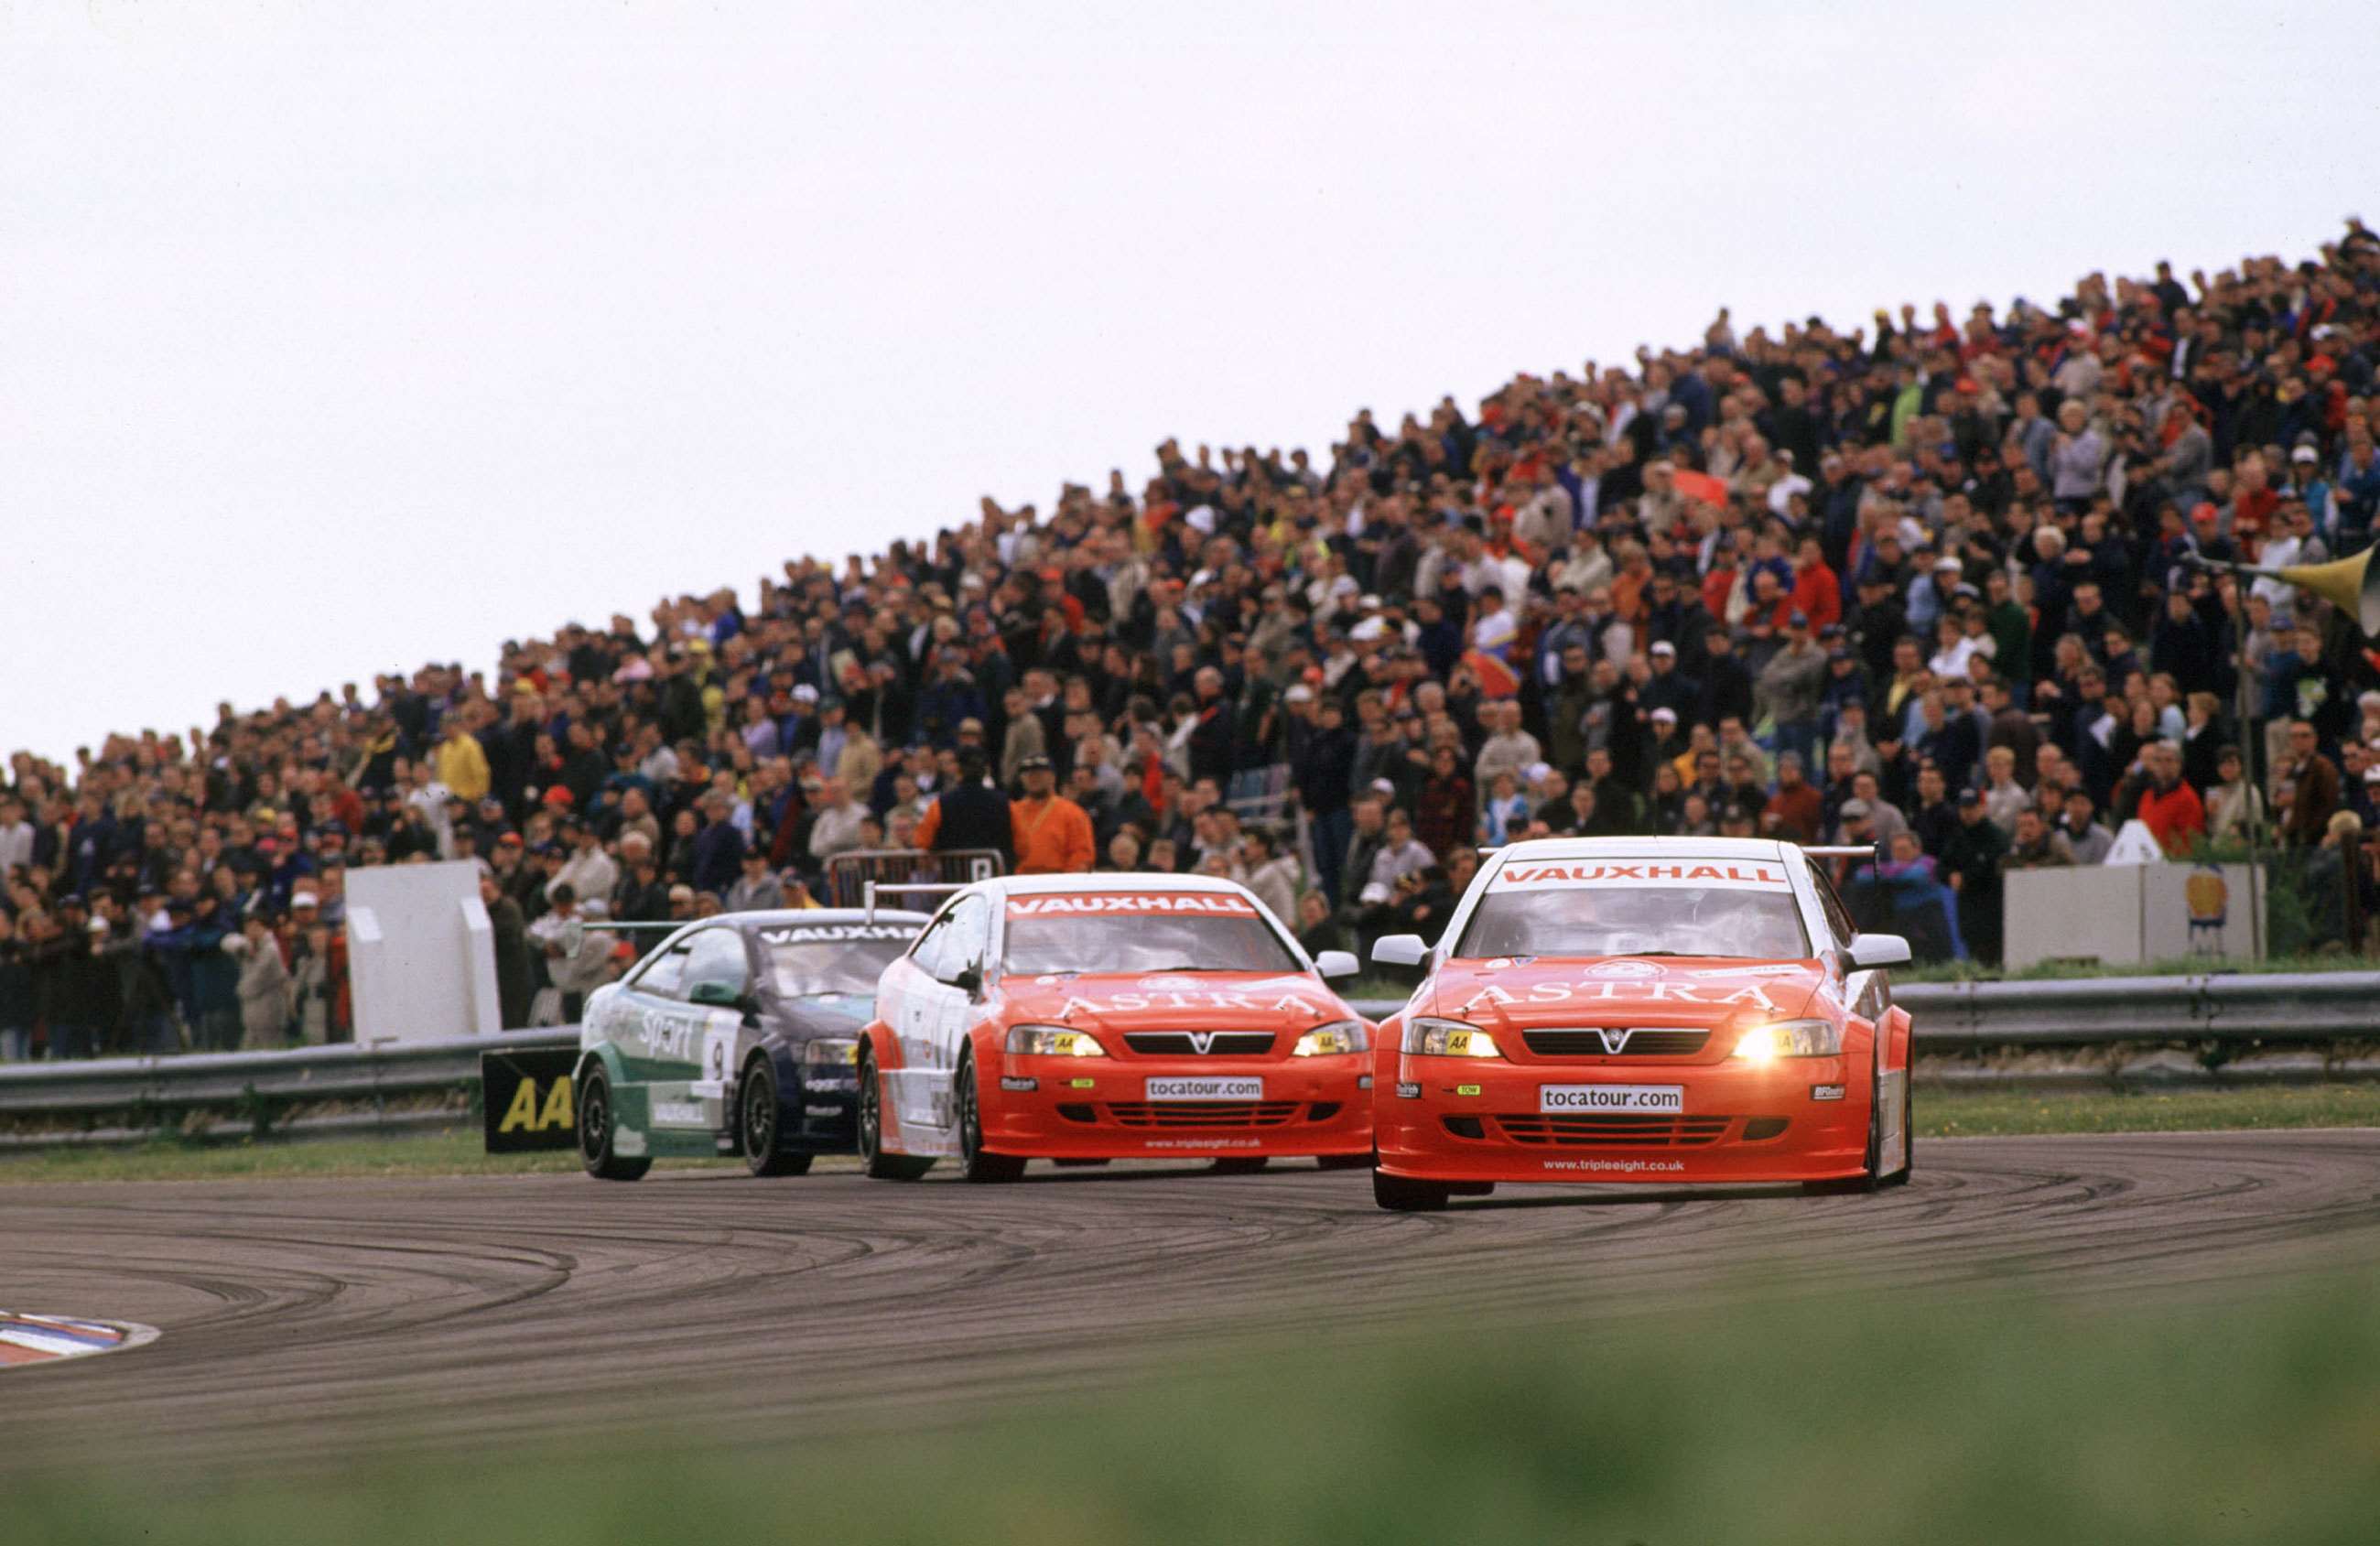 most-dominant-racing-cars-10-vauxhall-astra-coupe-btcc-2001-plato-muller-thompson-malcom-griffiths-mi-goodwood-13112021.jpg